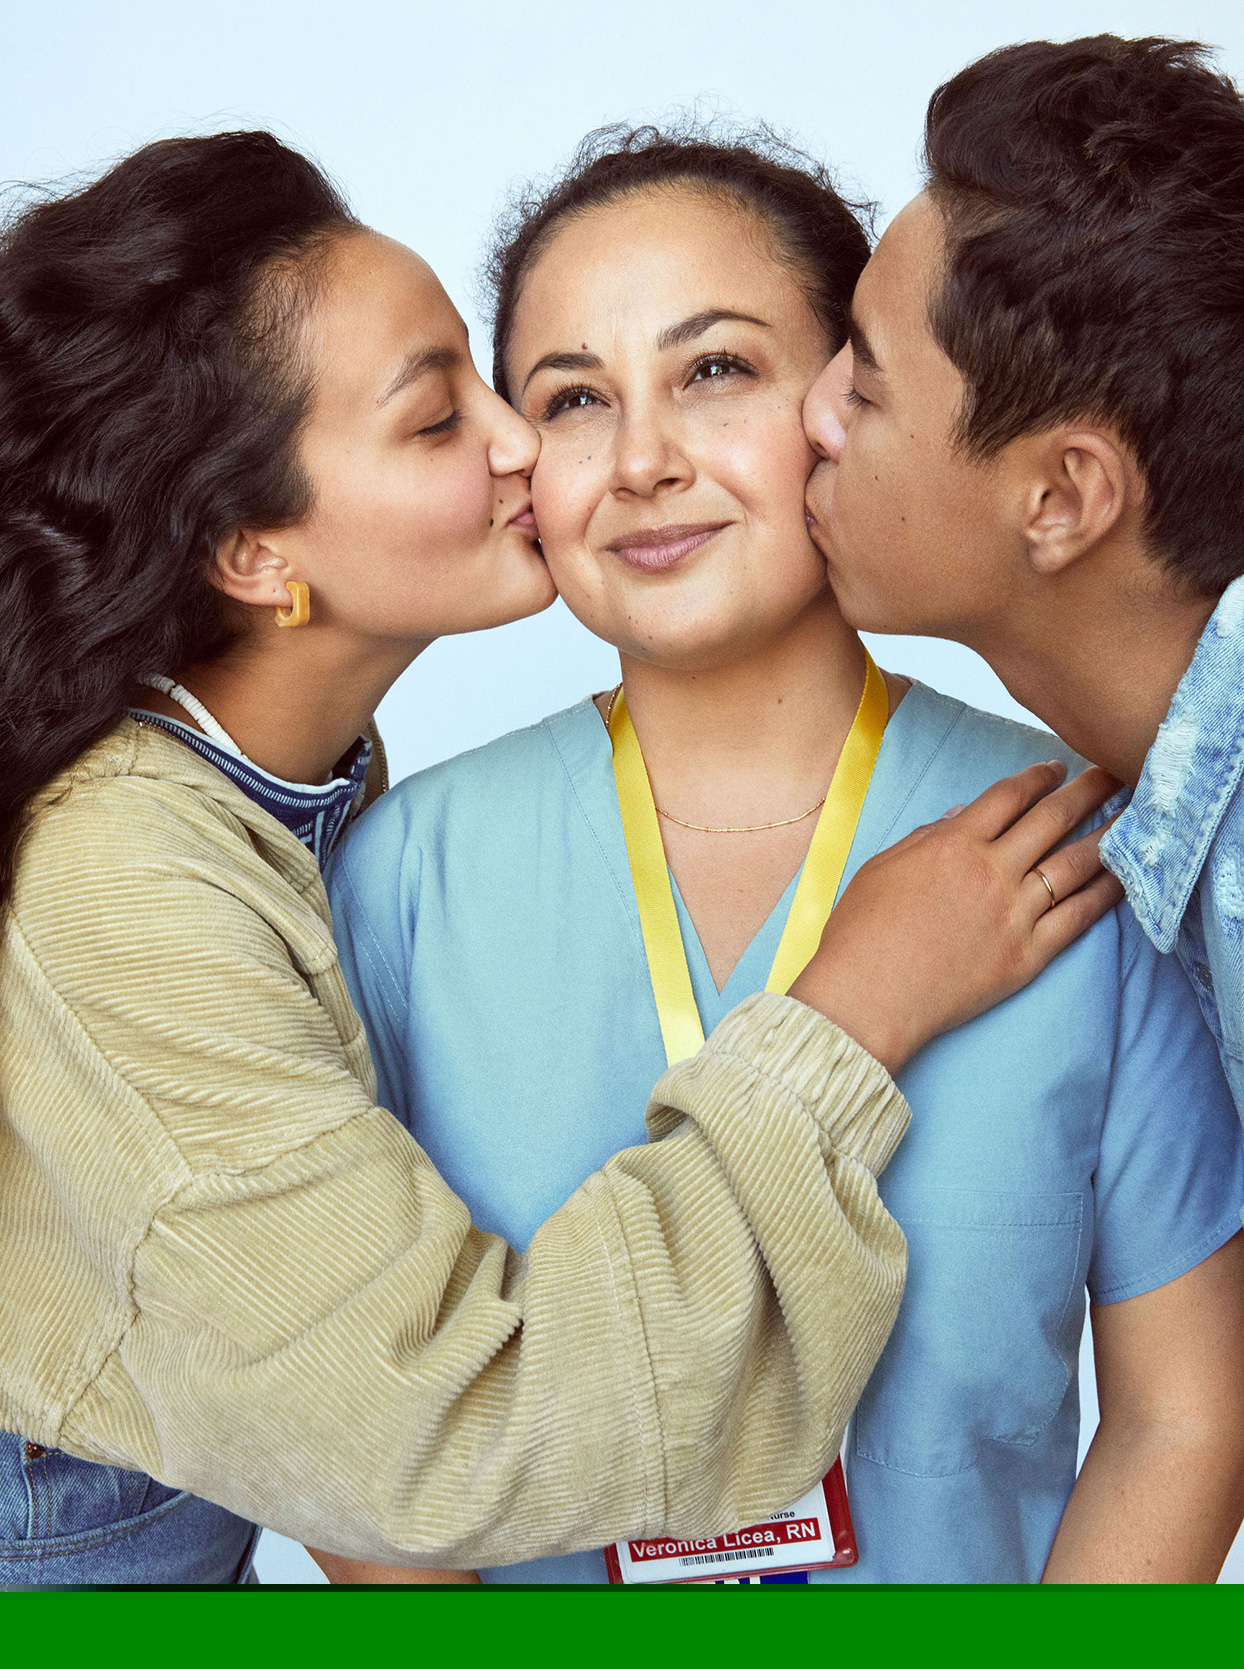 teens kissing mother and nurse Veronica Licea on cheek